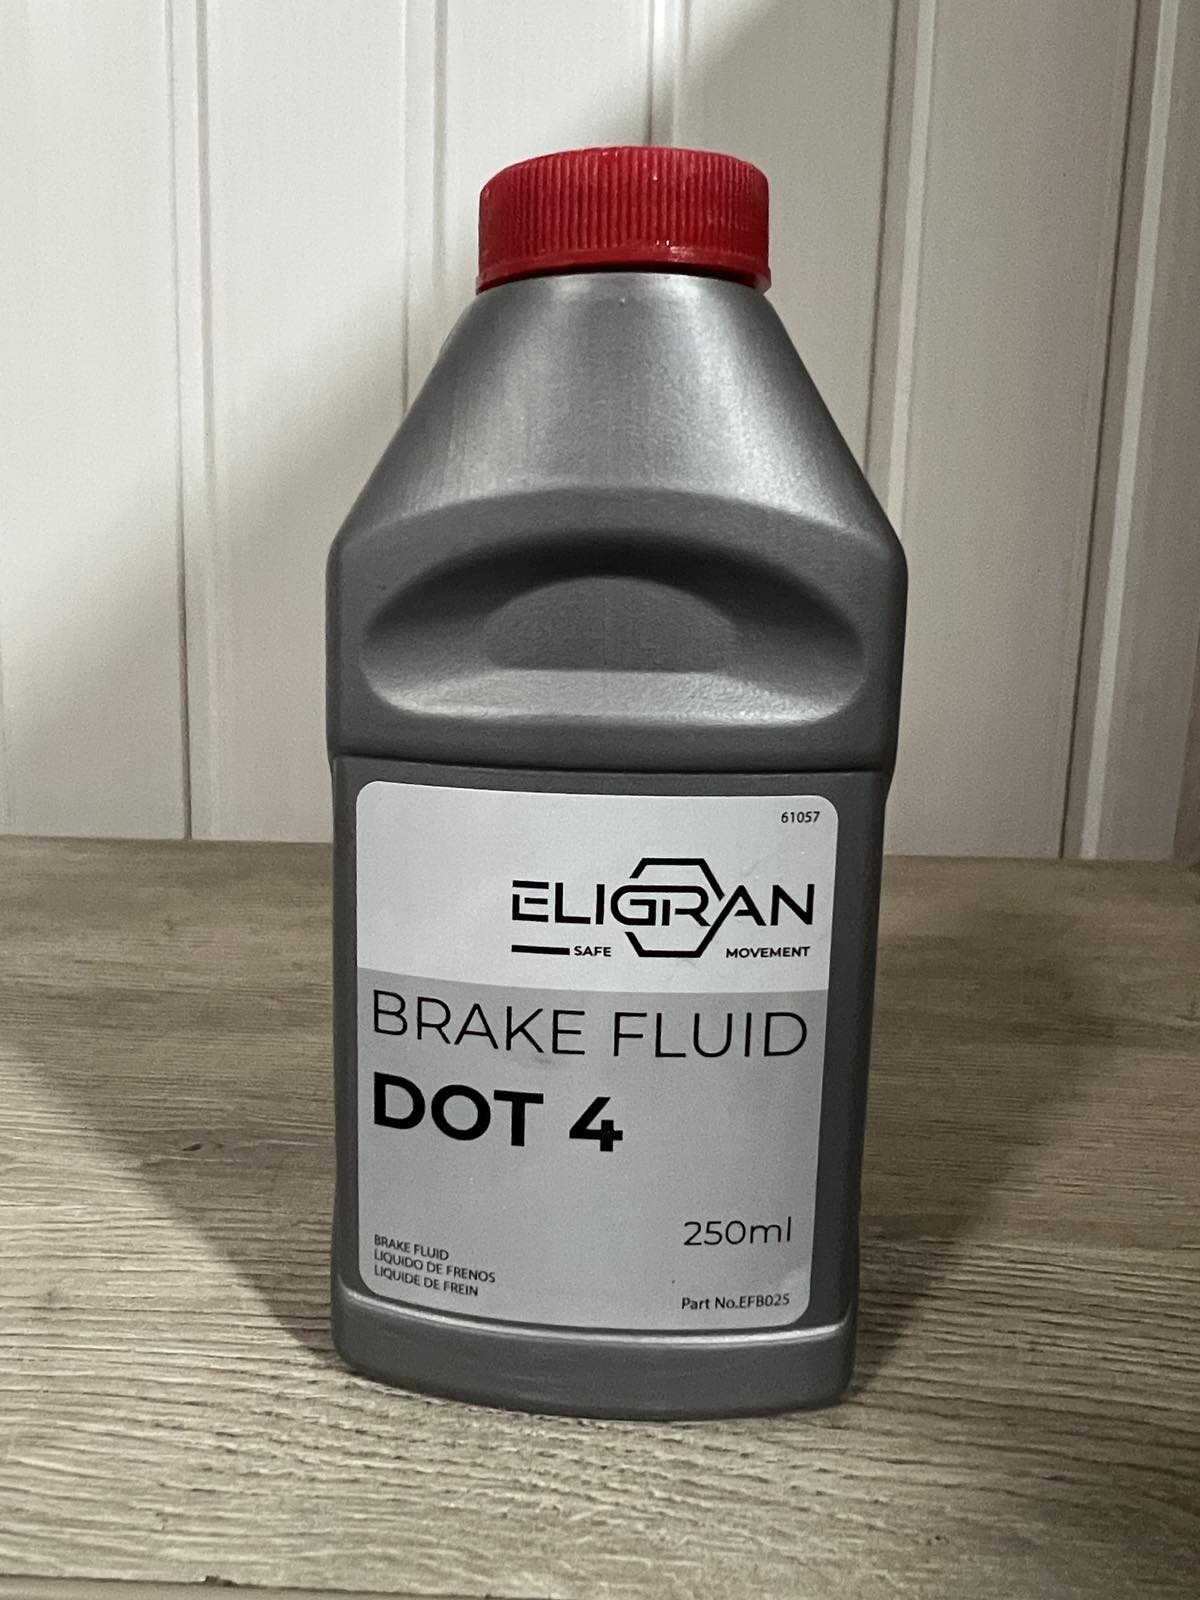   Eligran DOT-4